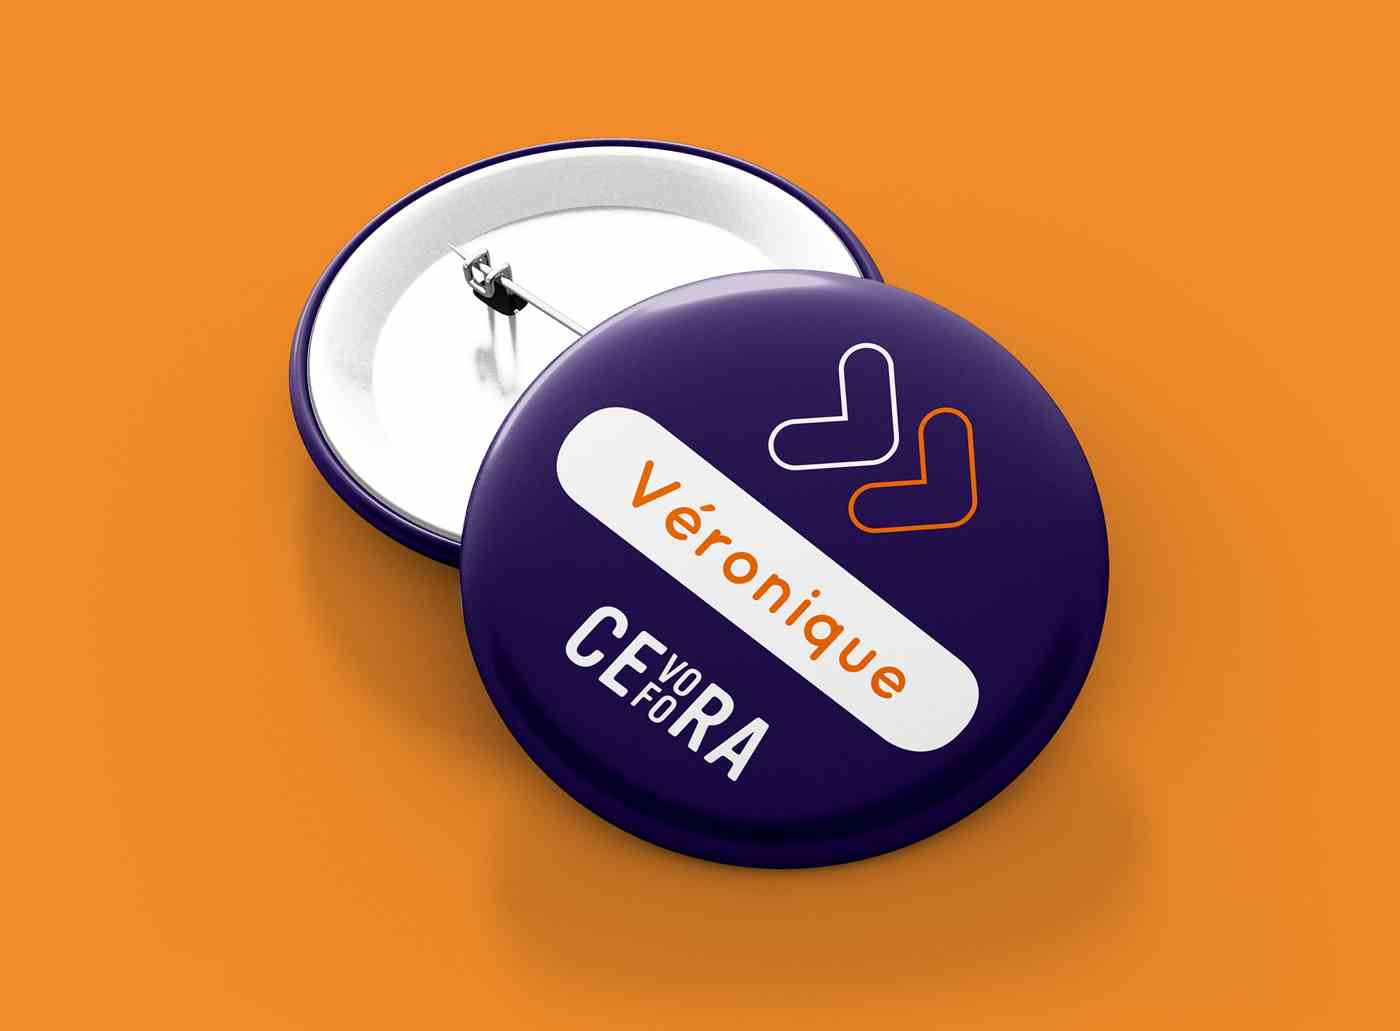 Cevora items for fair button